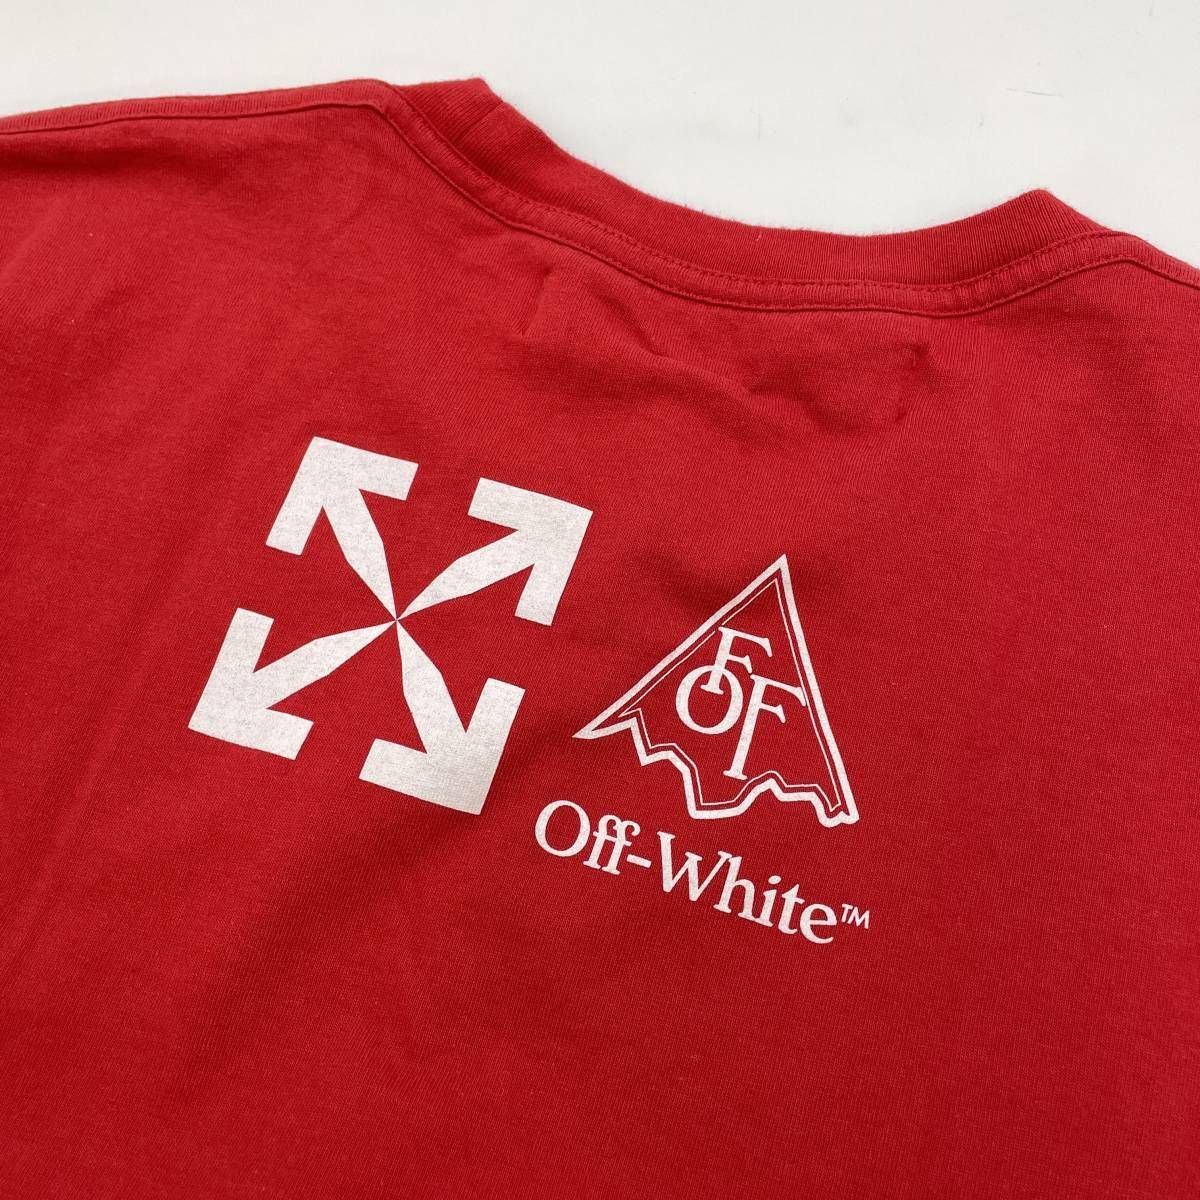 OFF-WHITE オフホワイト イーグル プリント Tシャツ size M